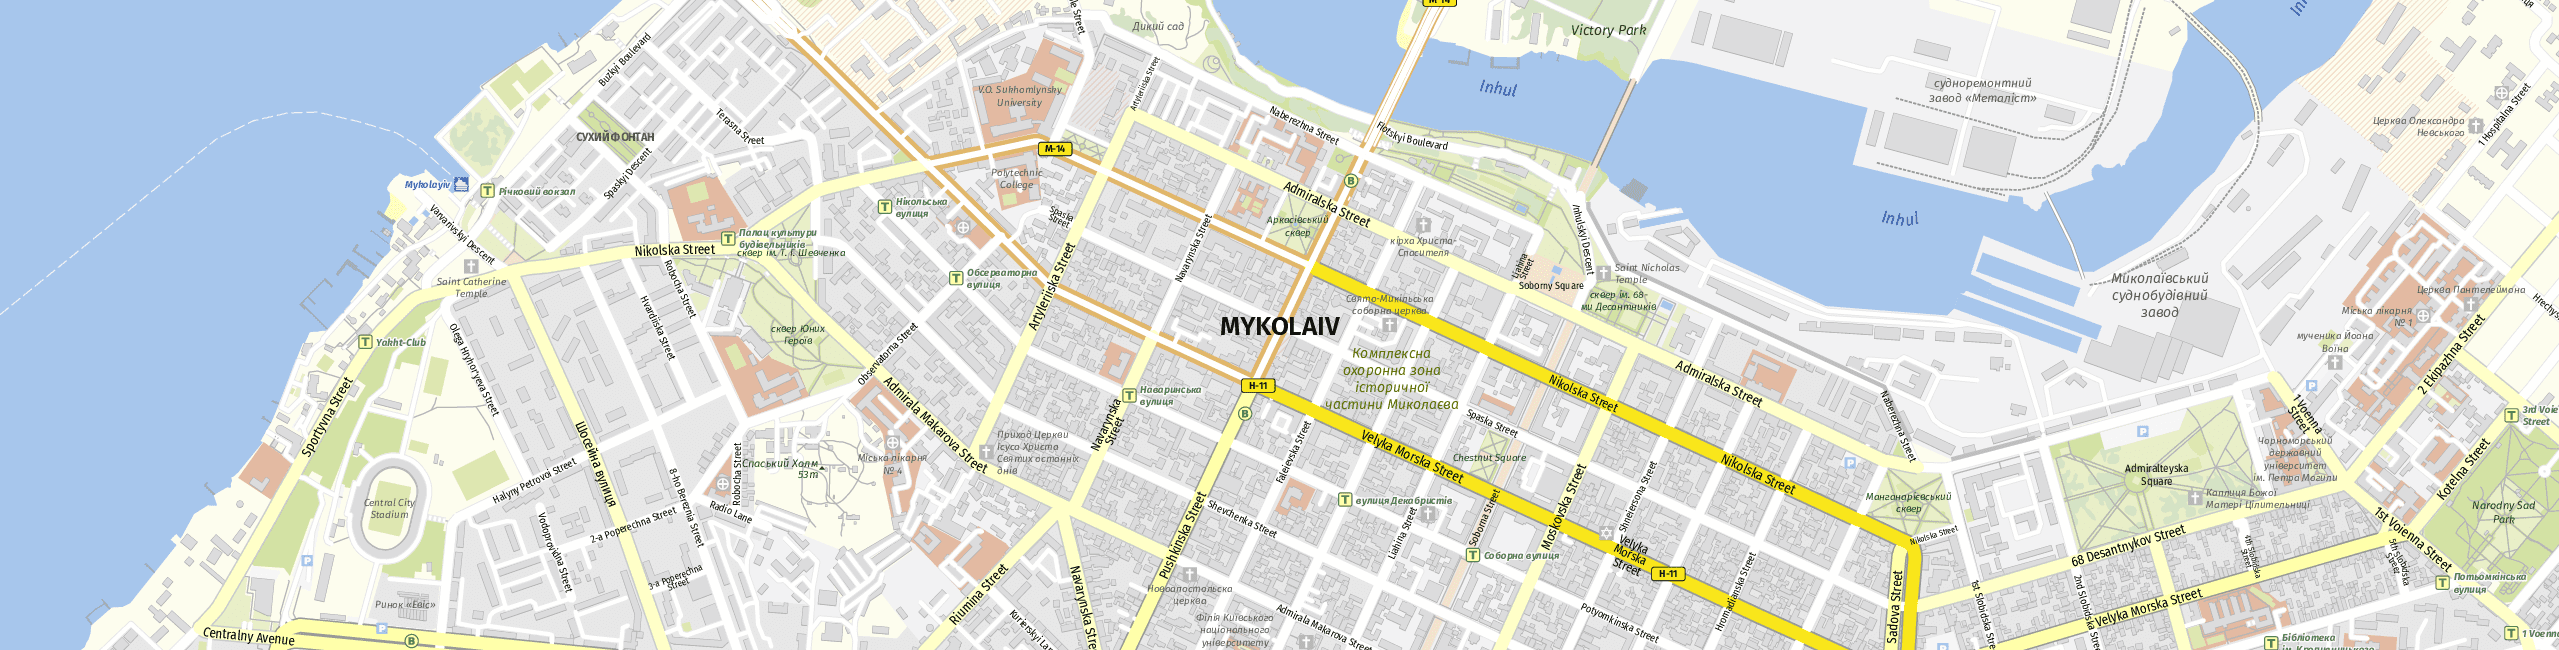 Stadtplan Mykolaiv zum Downloaden.